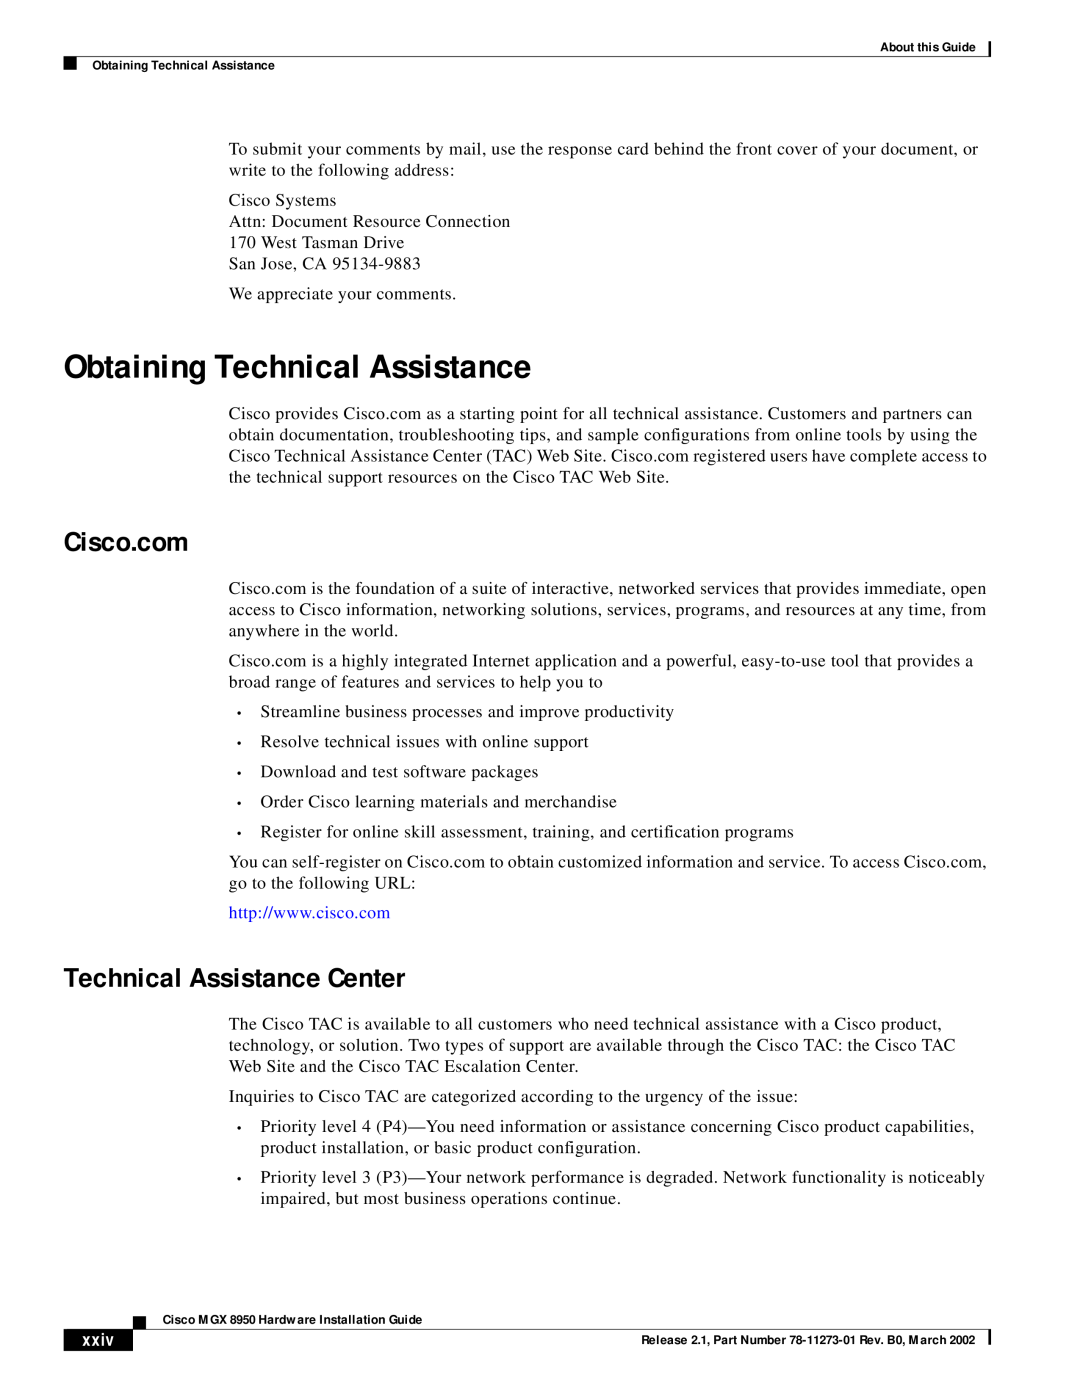 Cisco Systems MGX 8950 appendix Obtaining Technical Assistance, Cisco.com, Technical Assistance Center, xxiv 